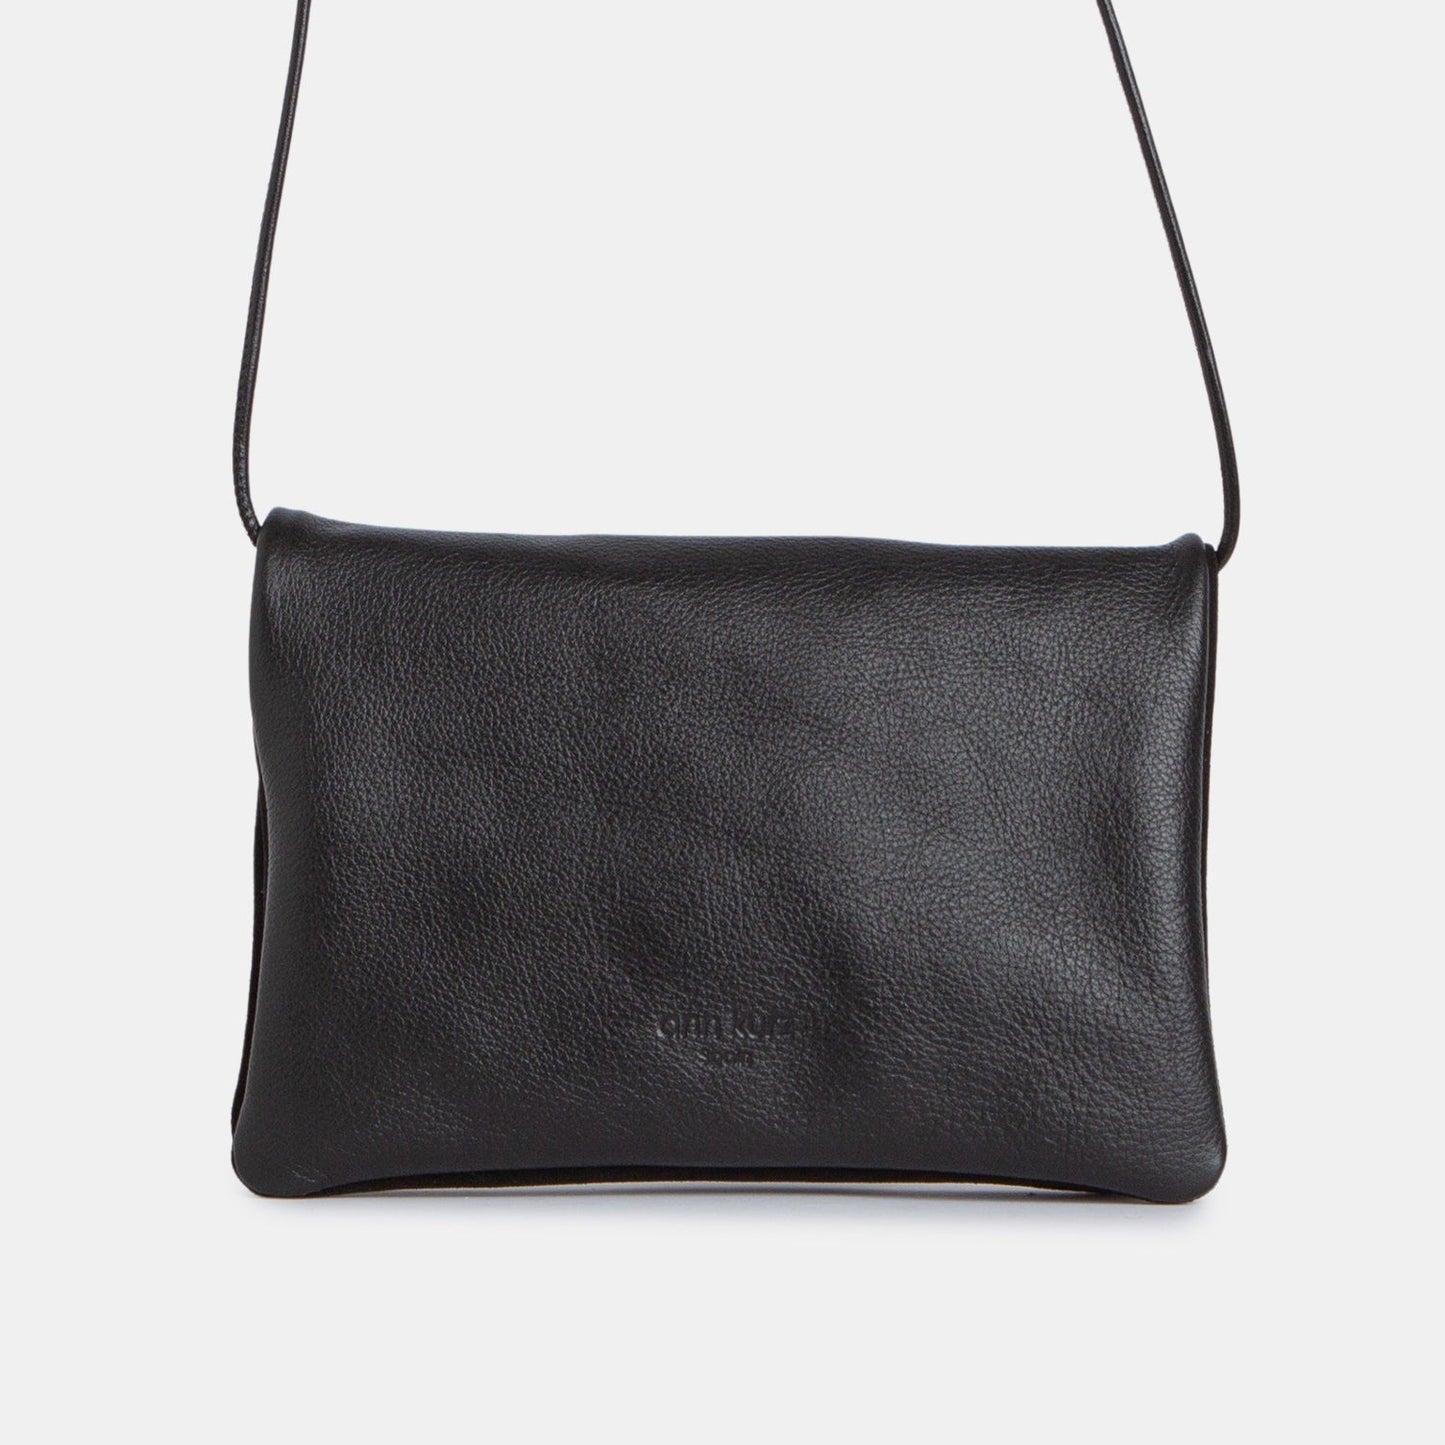 Doblo Shoulder Bag | New -Nappa Black + Suede Black- ann kurz